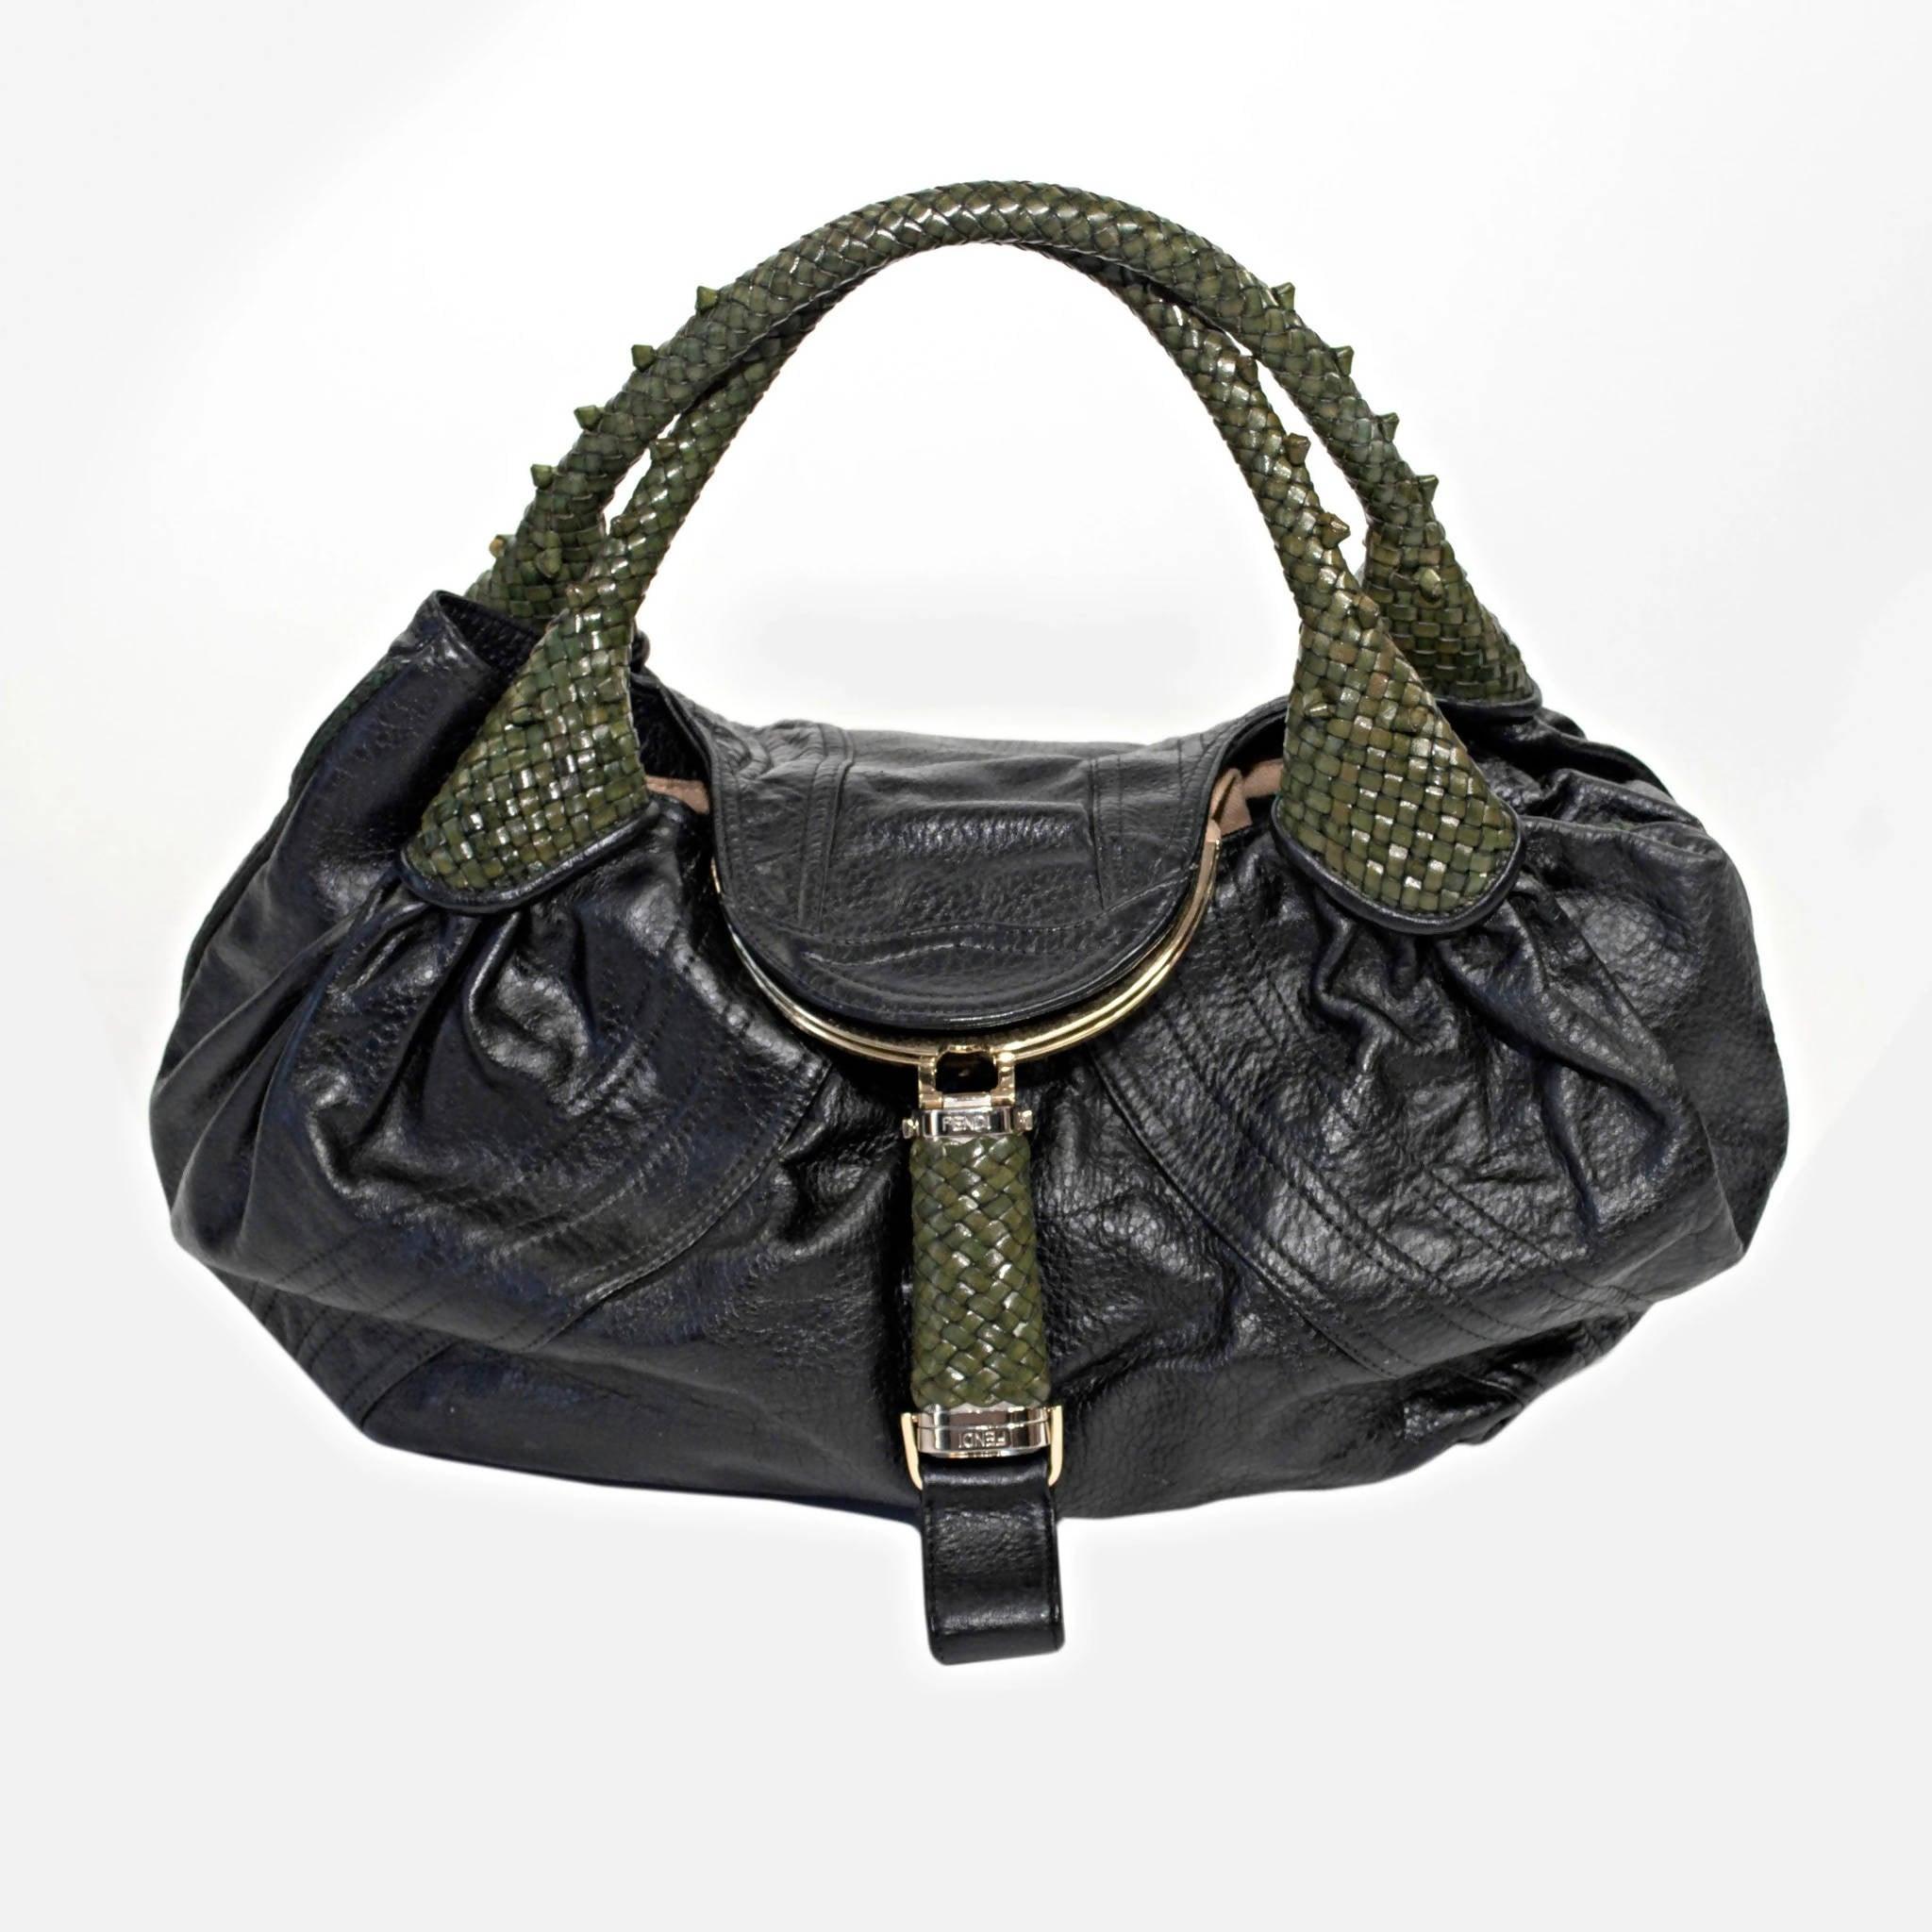 Fendi Pre-owned Leather Handbag